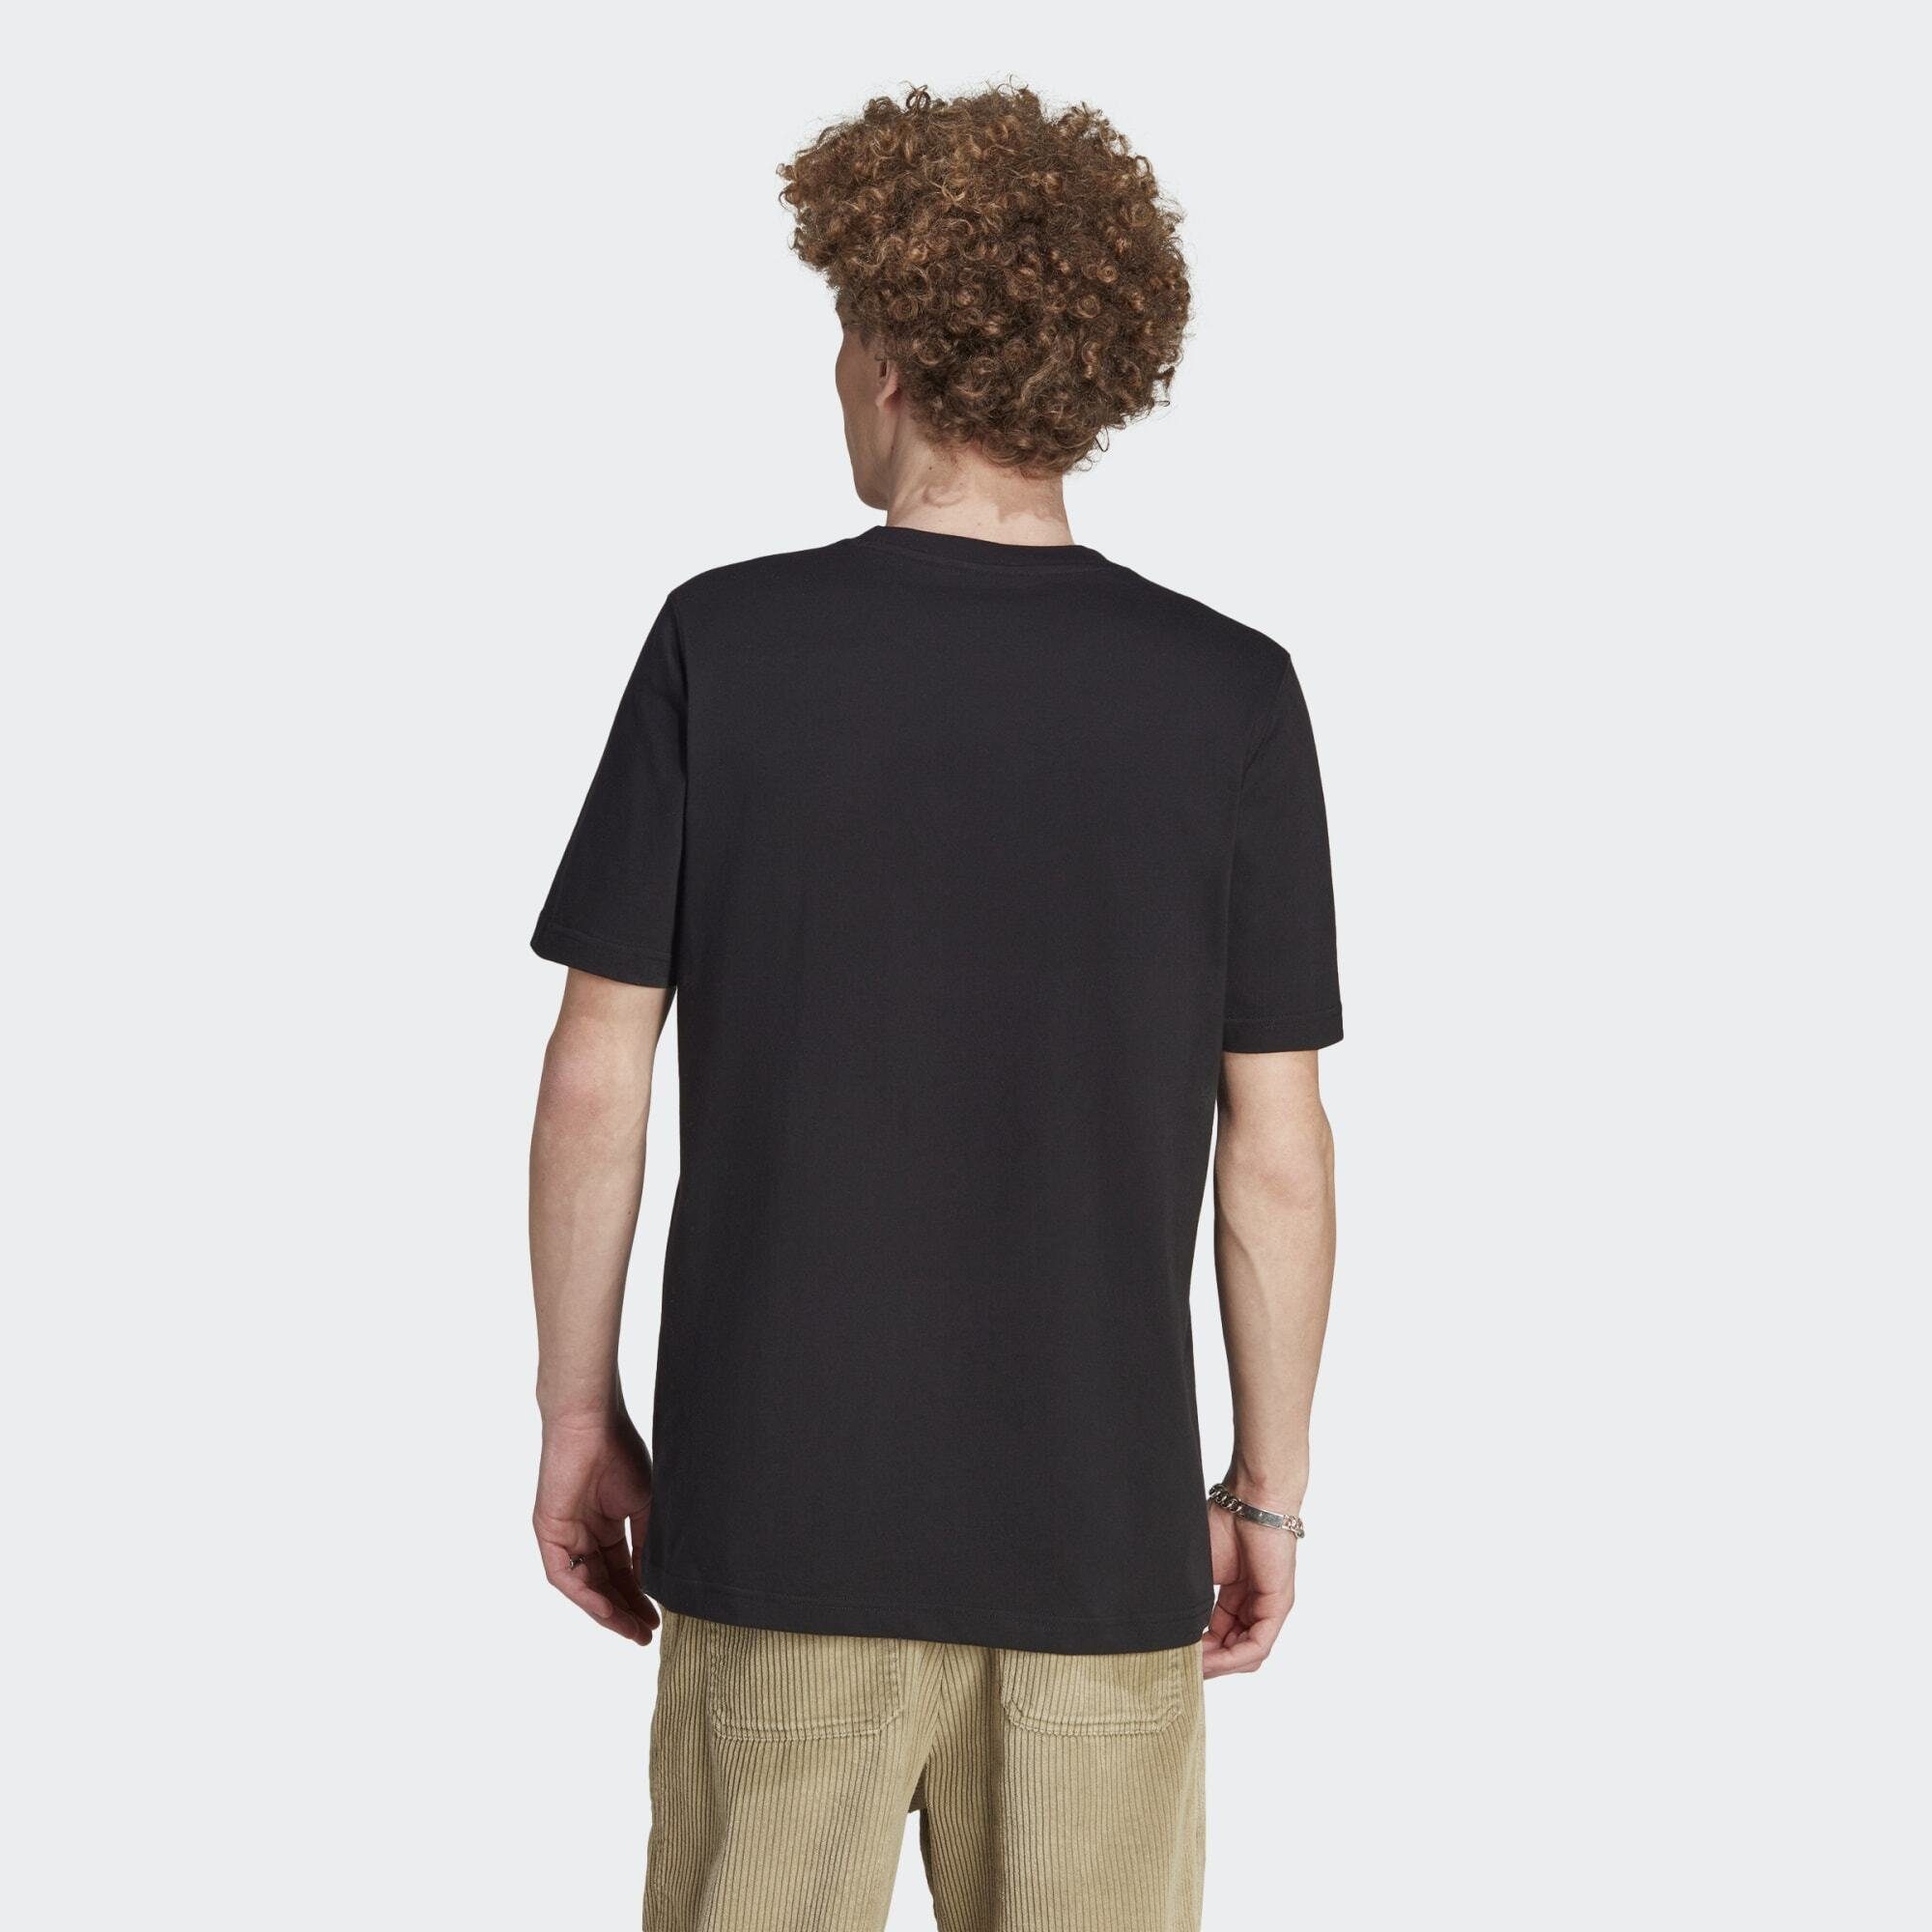 T-Shirt TREFOIL / Originals adidas ADICOLOR T-SHIRT CLASSICS Black White